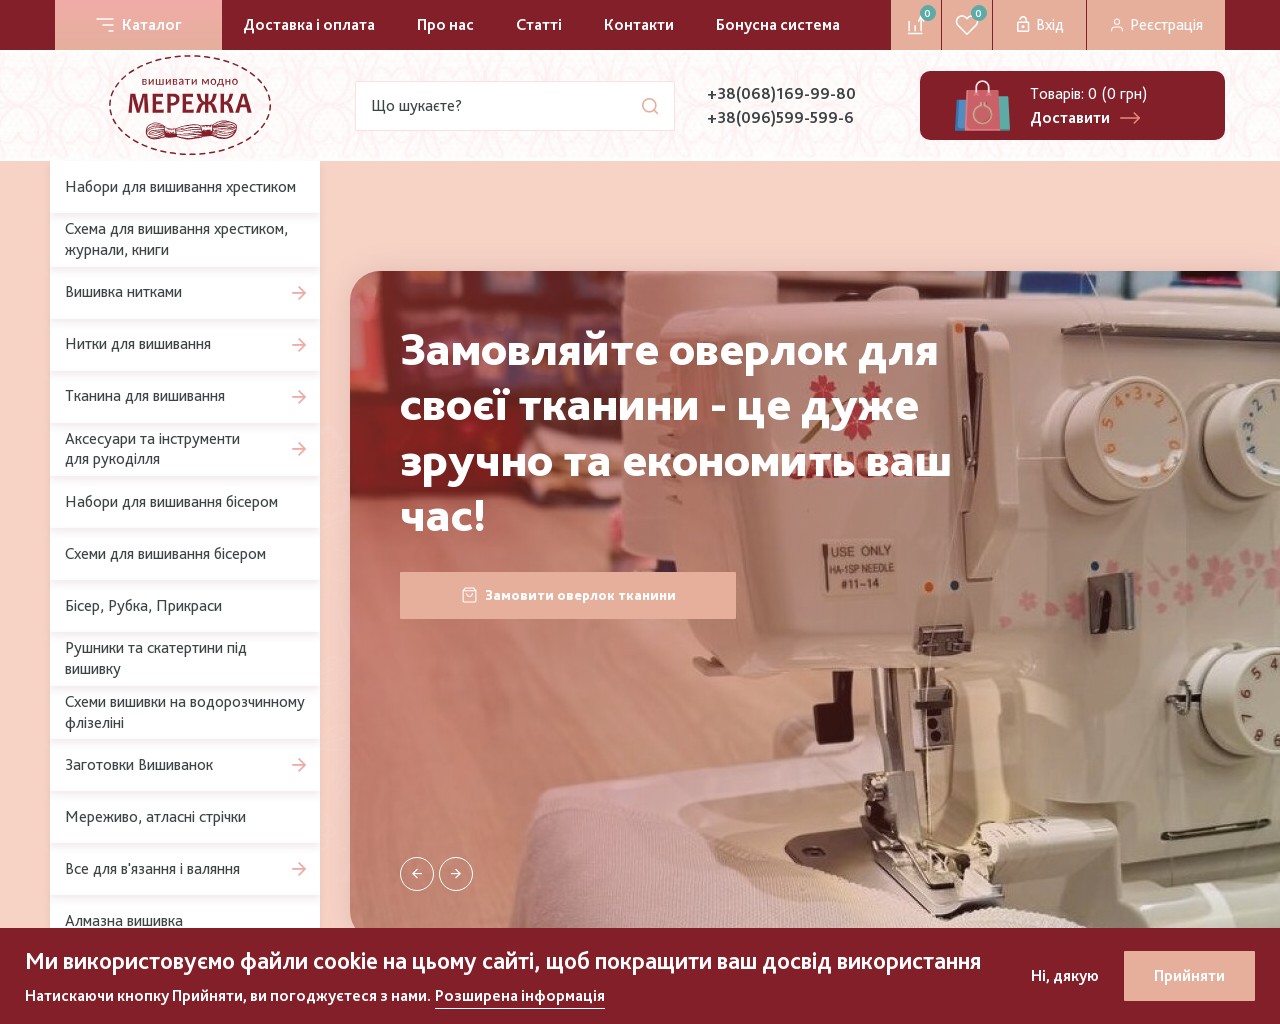 Изображение скриншота сайта - Інтернет-магазин для вишивки й товари для рукоділля «Мережка»